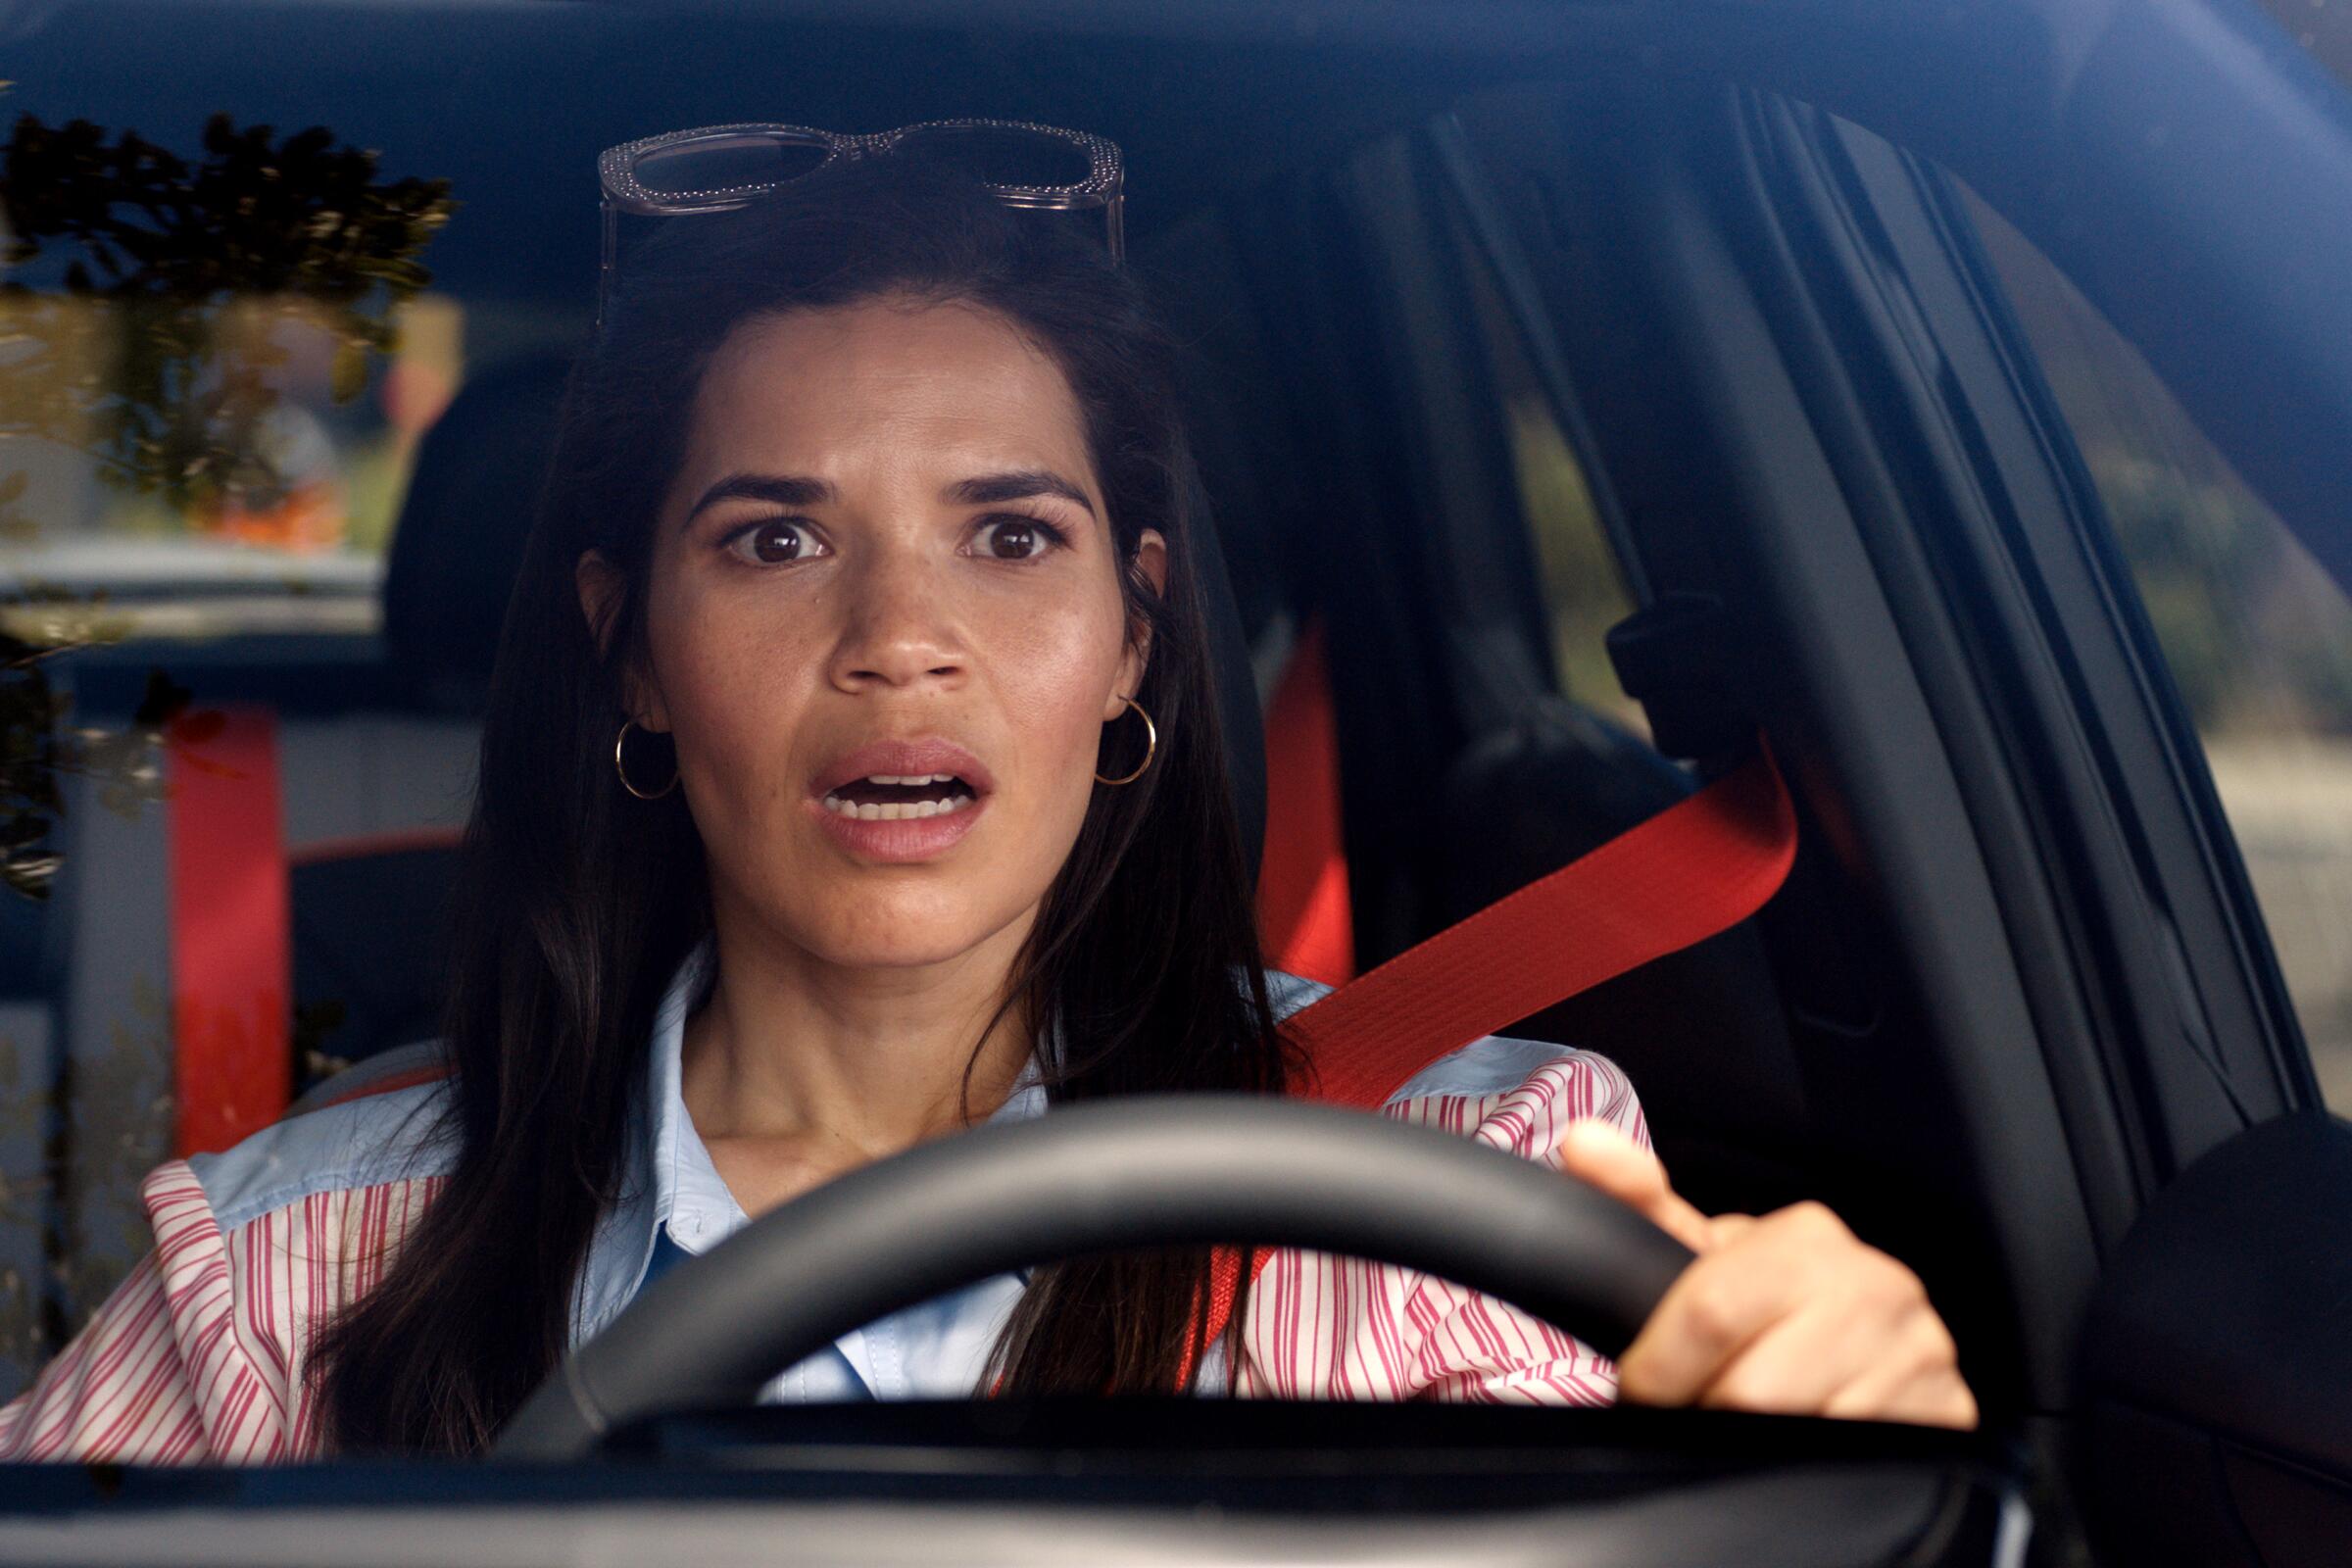 America Ferrera looks stressed as she drives a car in "Barbie."